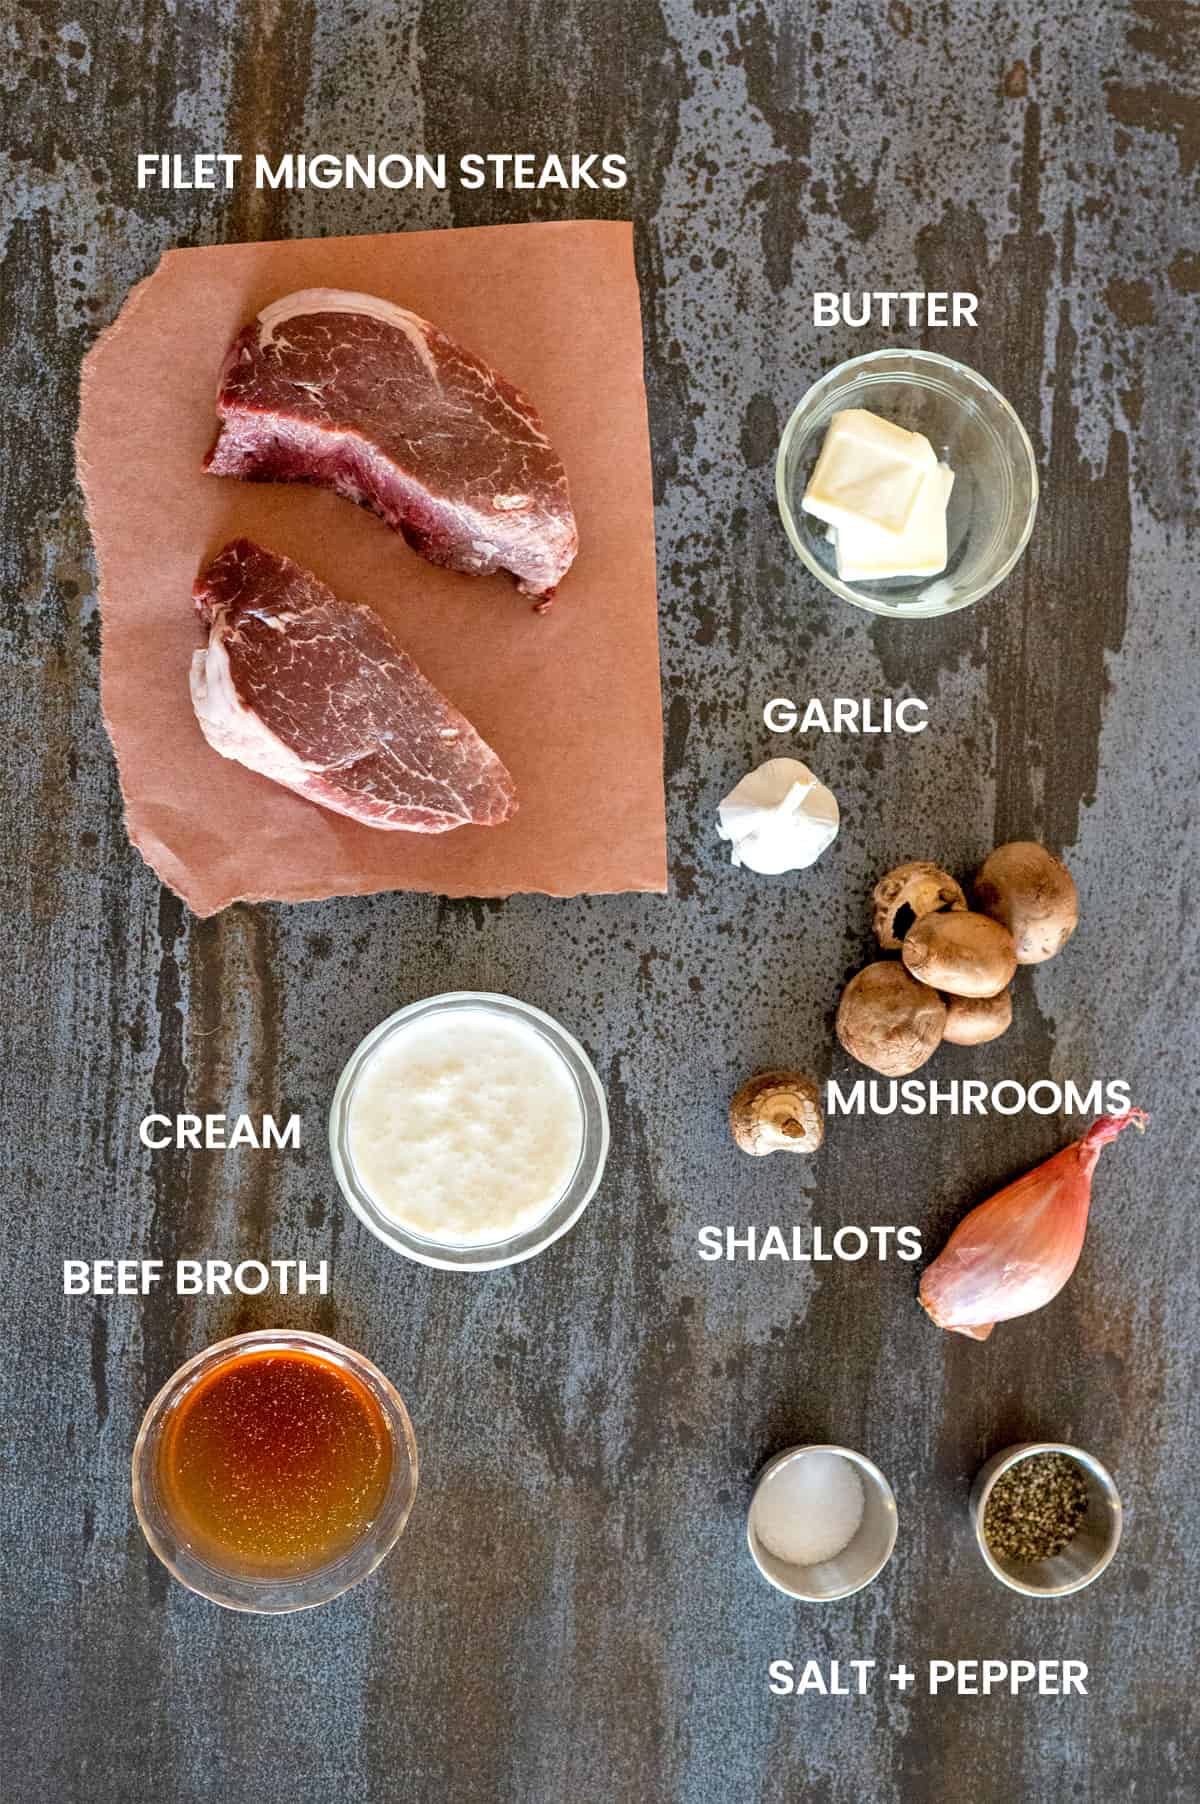 filet mignon ingredients: filet mignon, butter, garlic, mushrooms, shallots, cream, beef broth, salt and pepper.